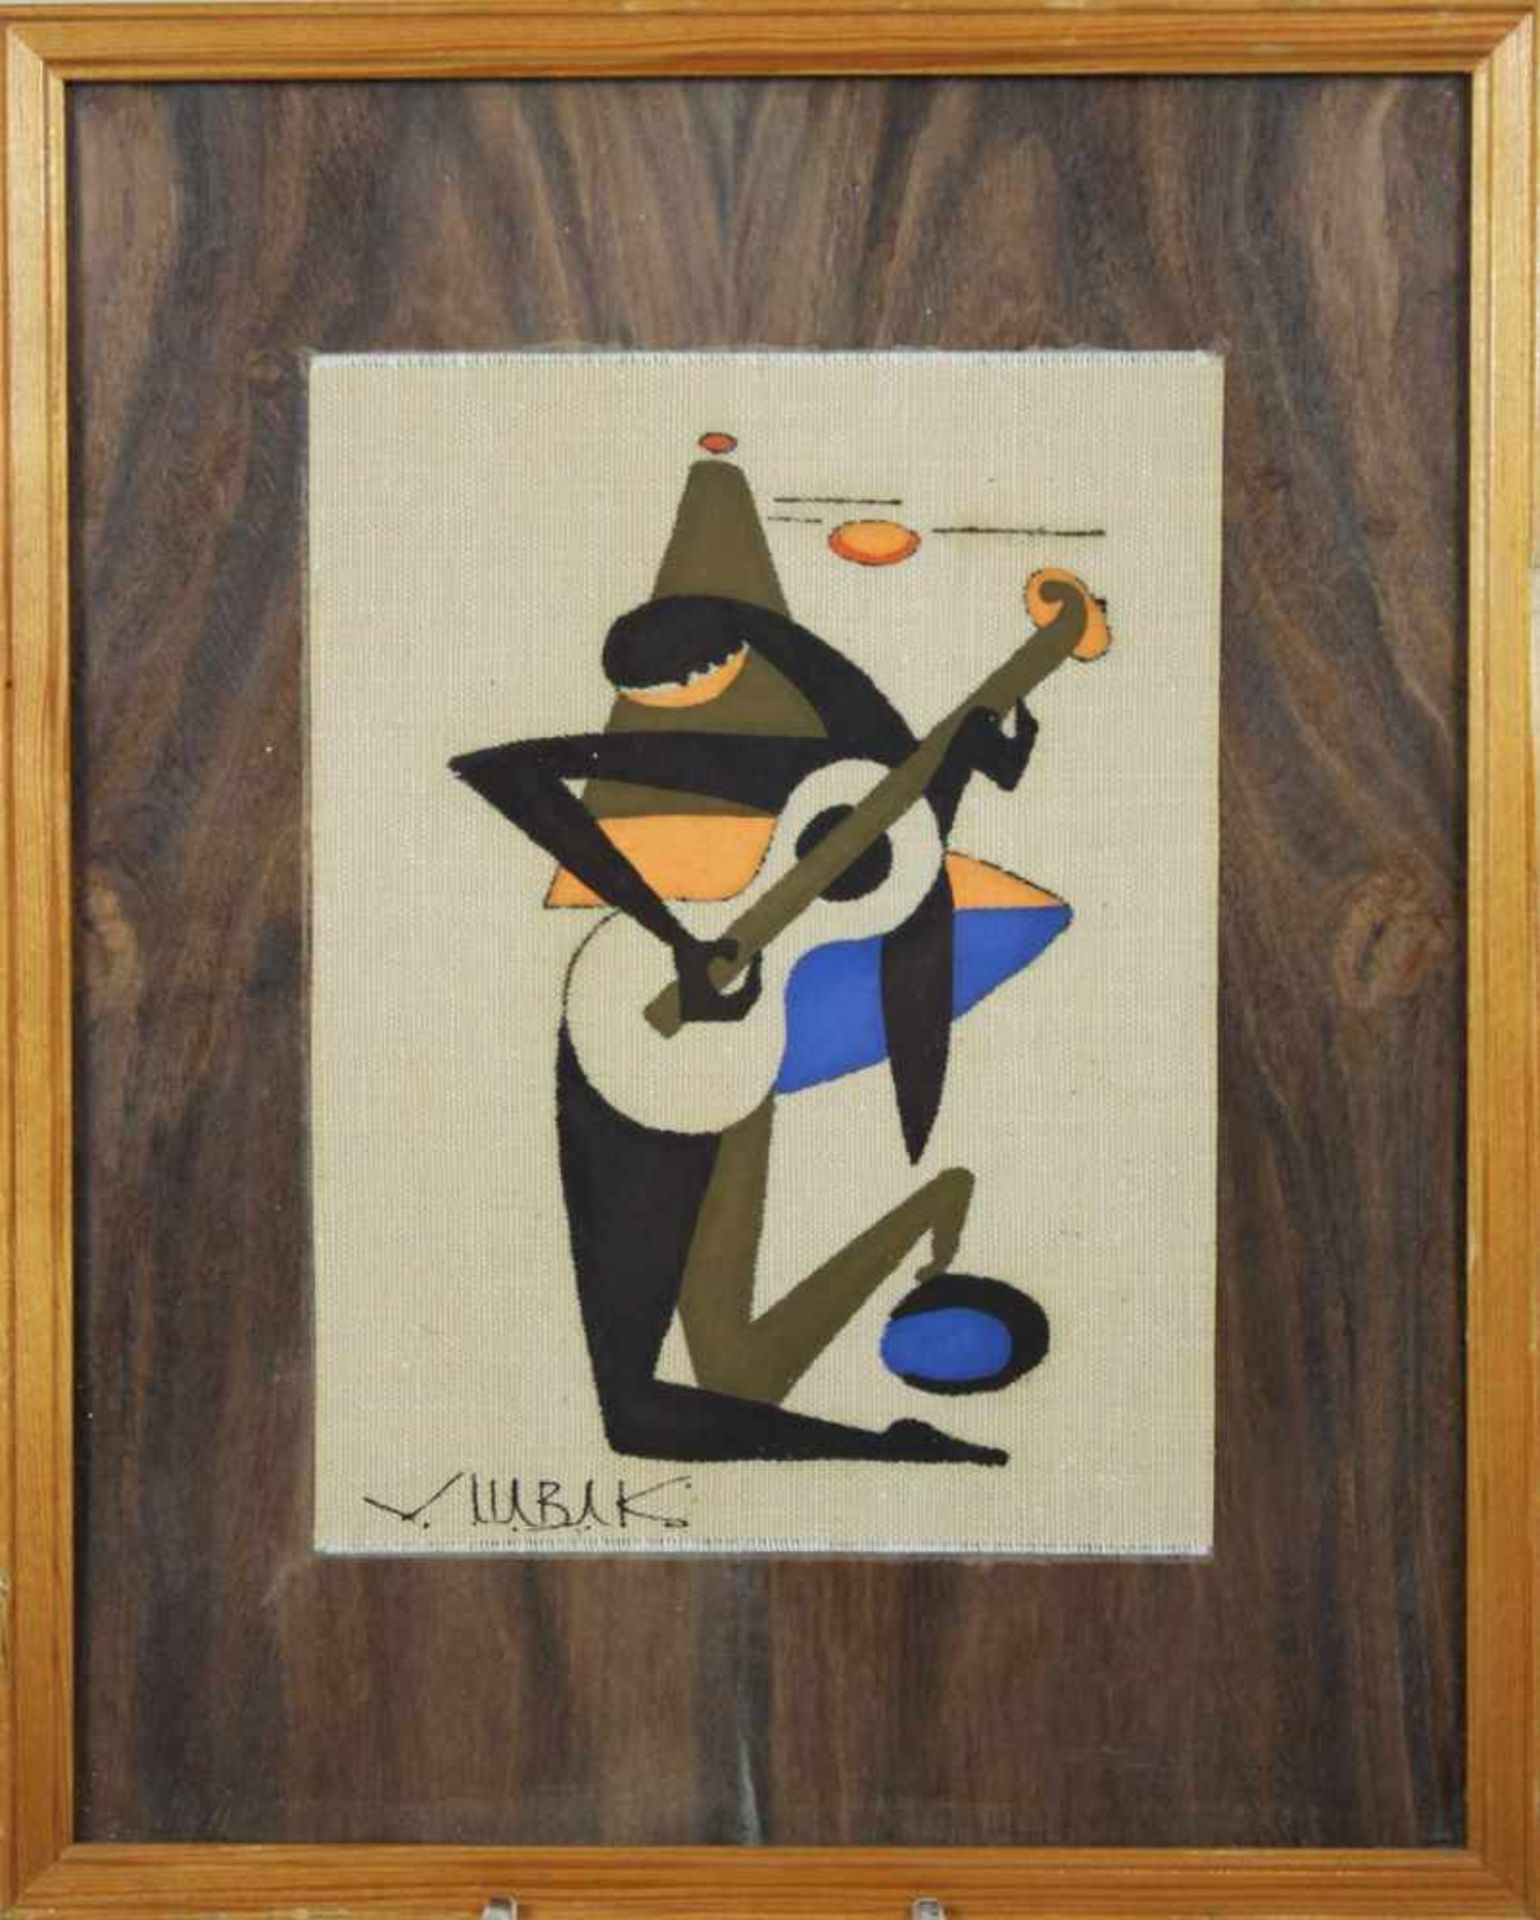 Gitarre spielende Figur, Print a. Stoff, a. Holz, sign. Maße: 16,5 x 12,5 cm, verglast, gerahmt. - Bild 2 aus 2